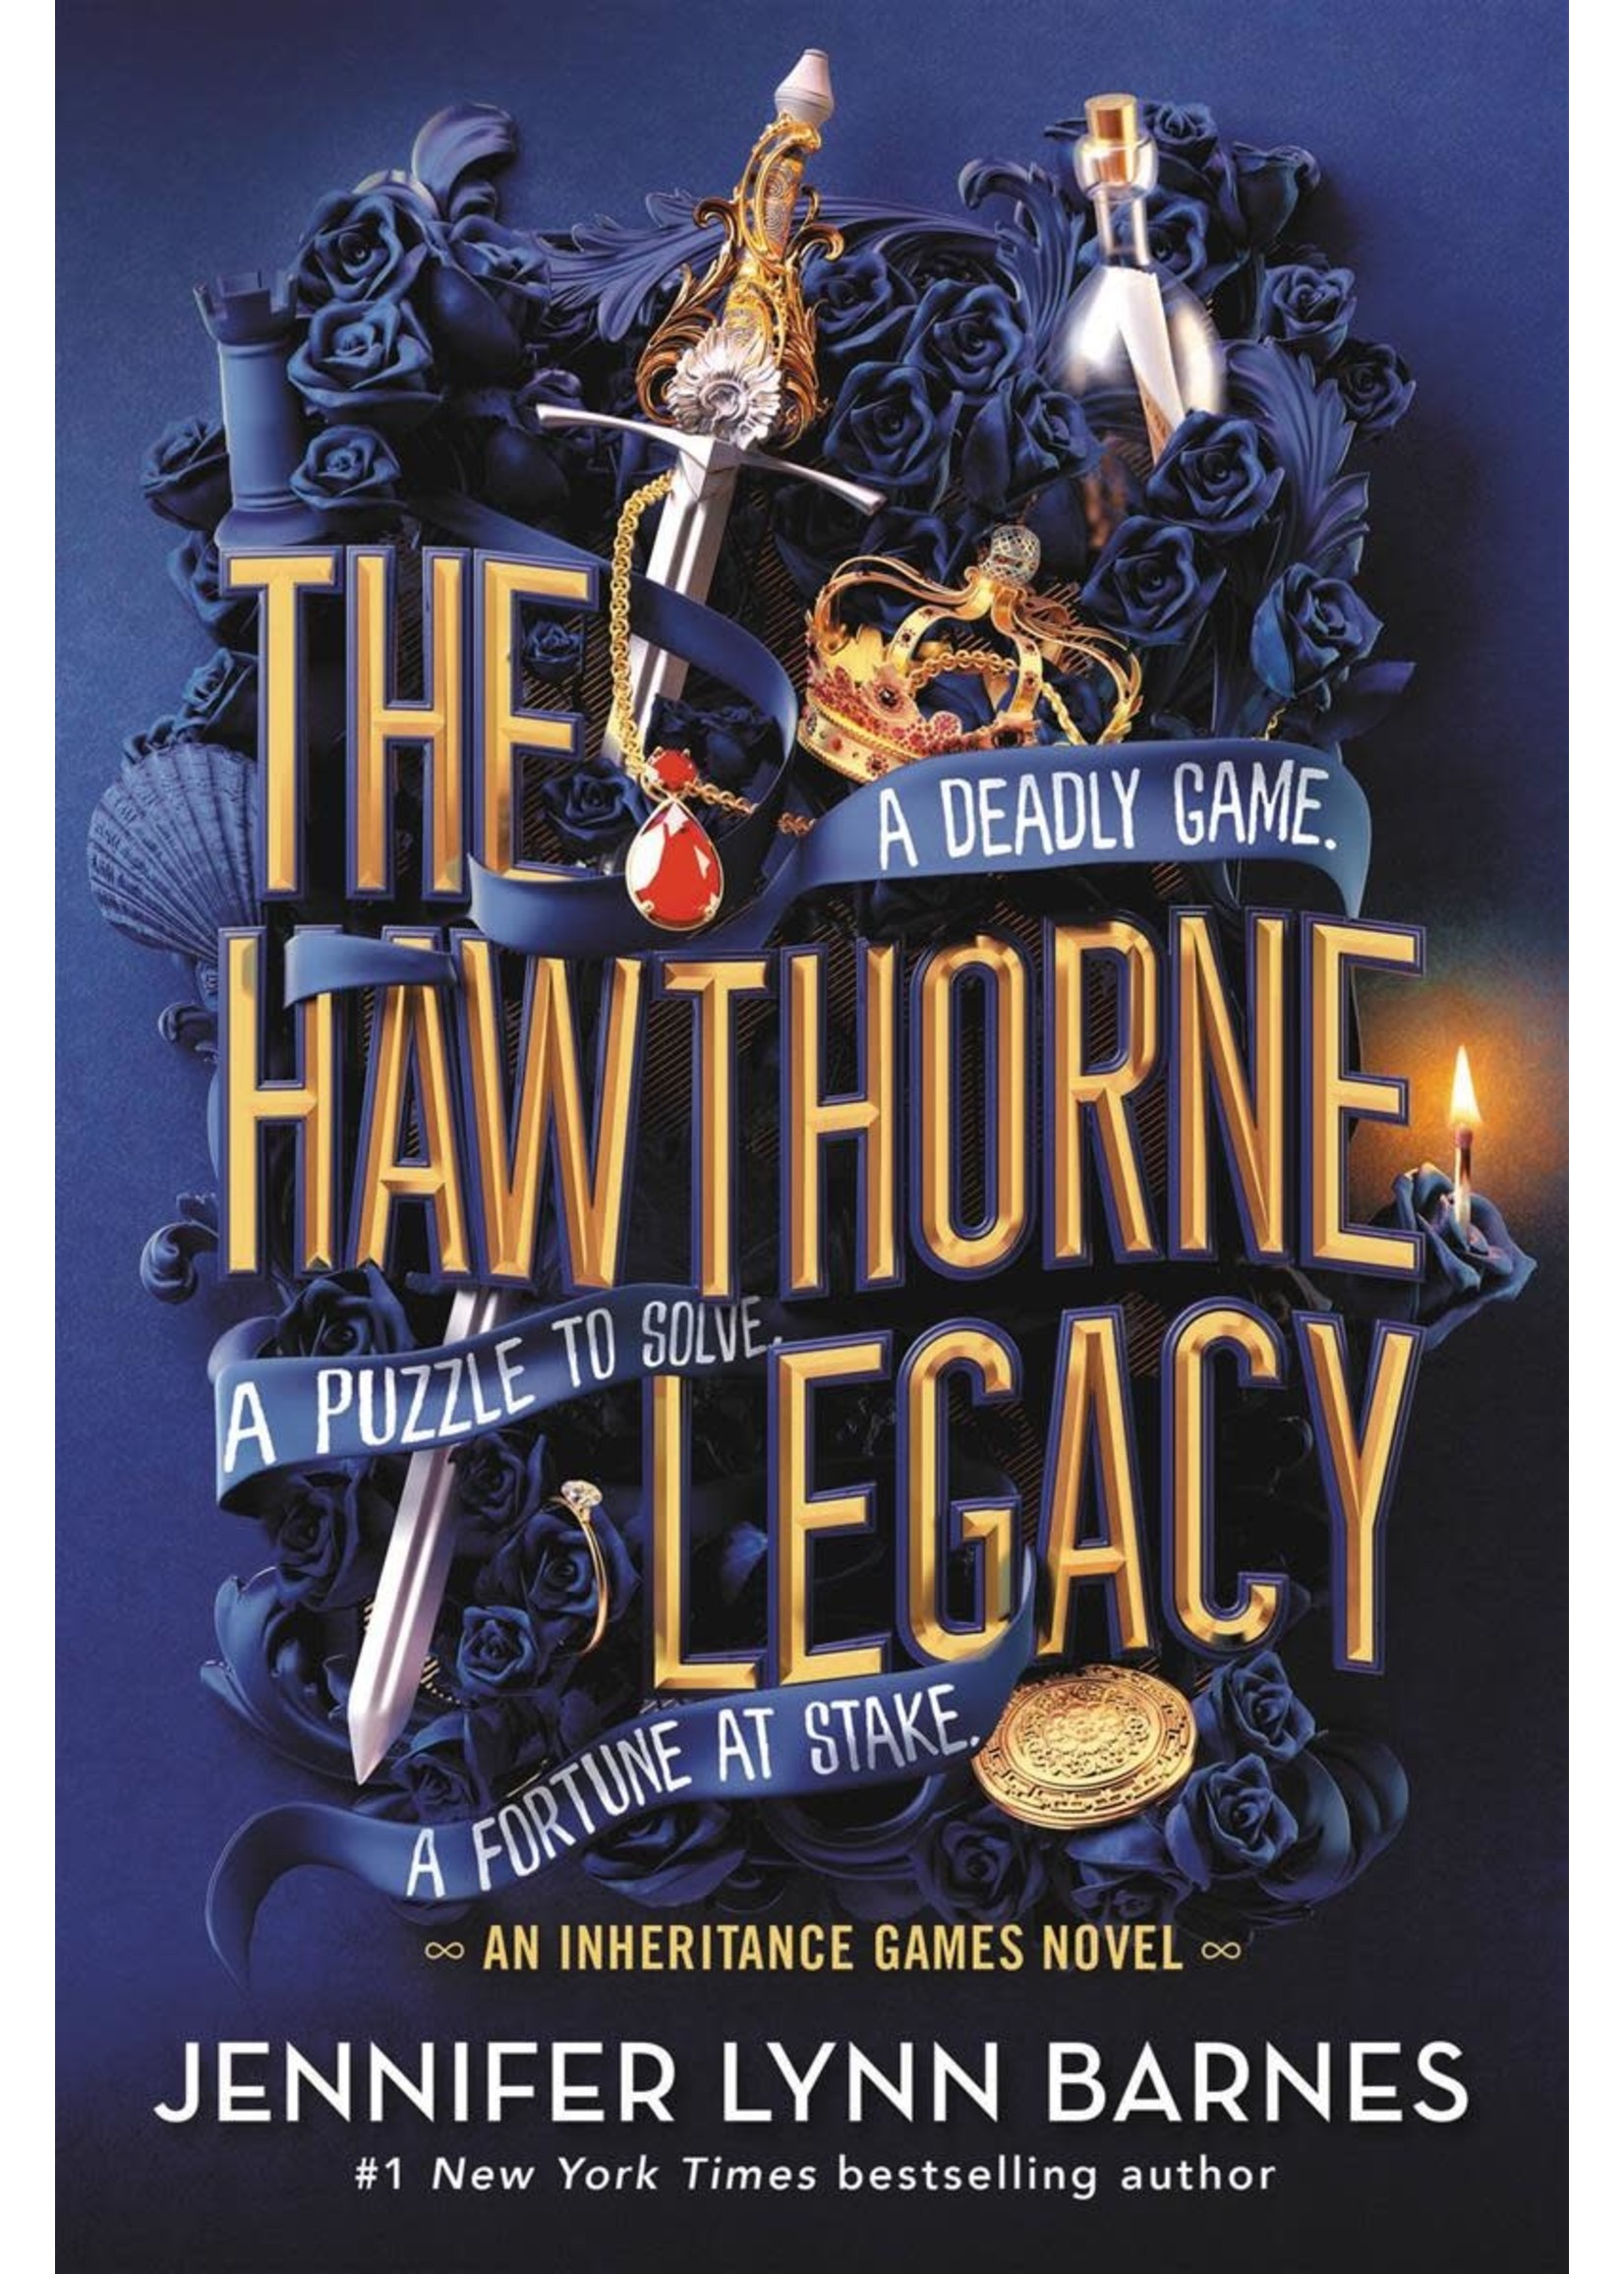 The Hawthorne Legacy (The Inheritance Games #2) by Jennifer Lynn Barnes